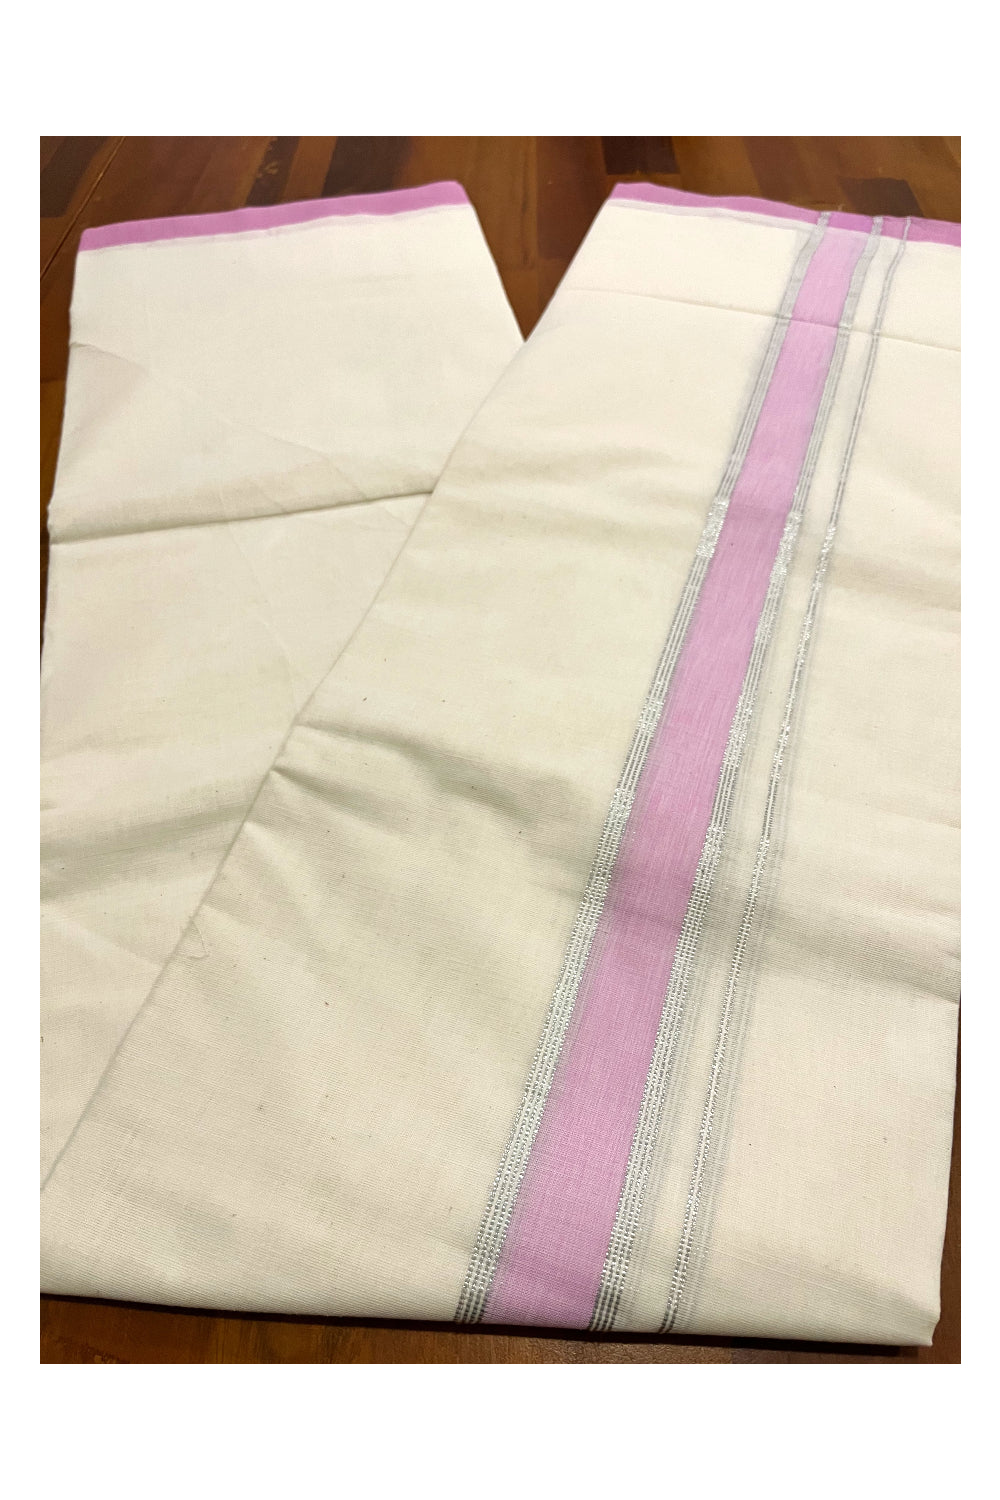 Cotton Double Mundu with Pink and Silver Kasavu Kara (South Indian Kerala Dhoti)